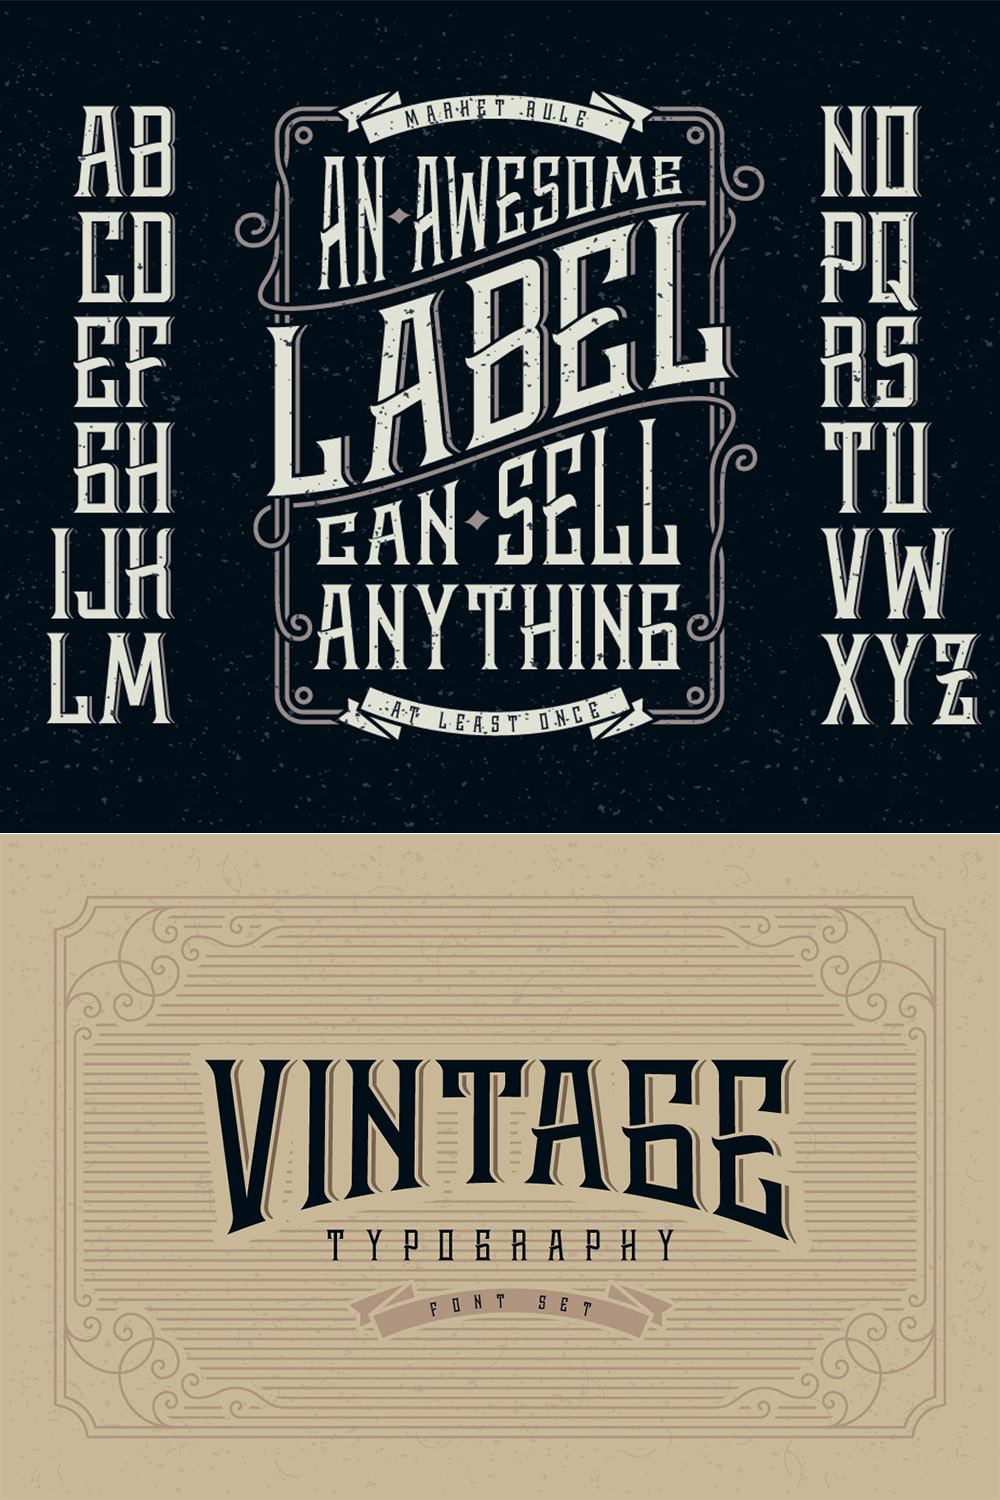 Whiskey Label Font Pinterest collage image.